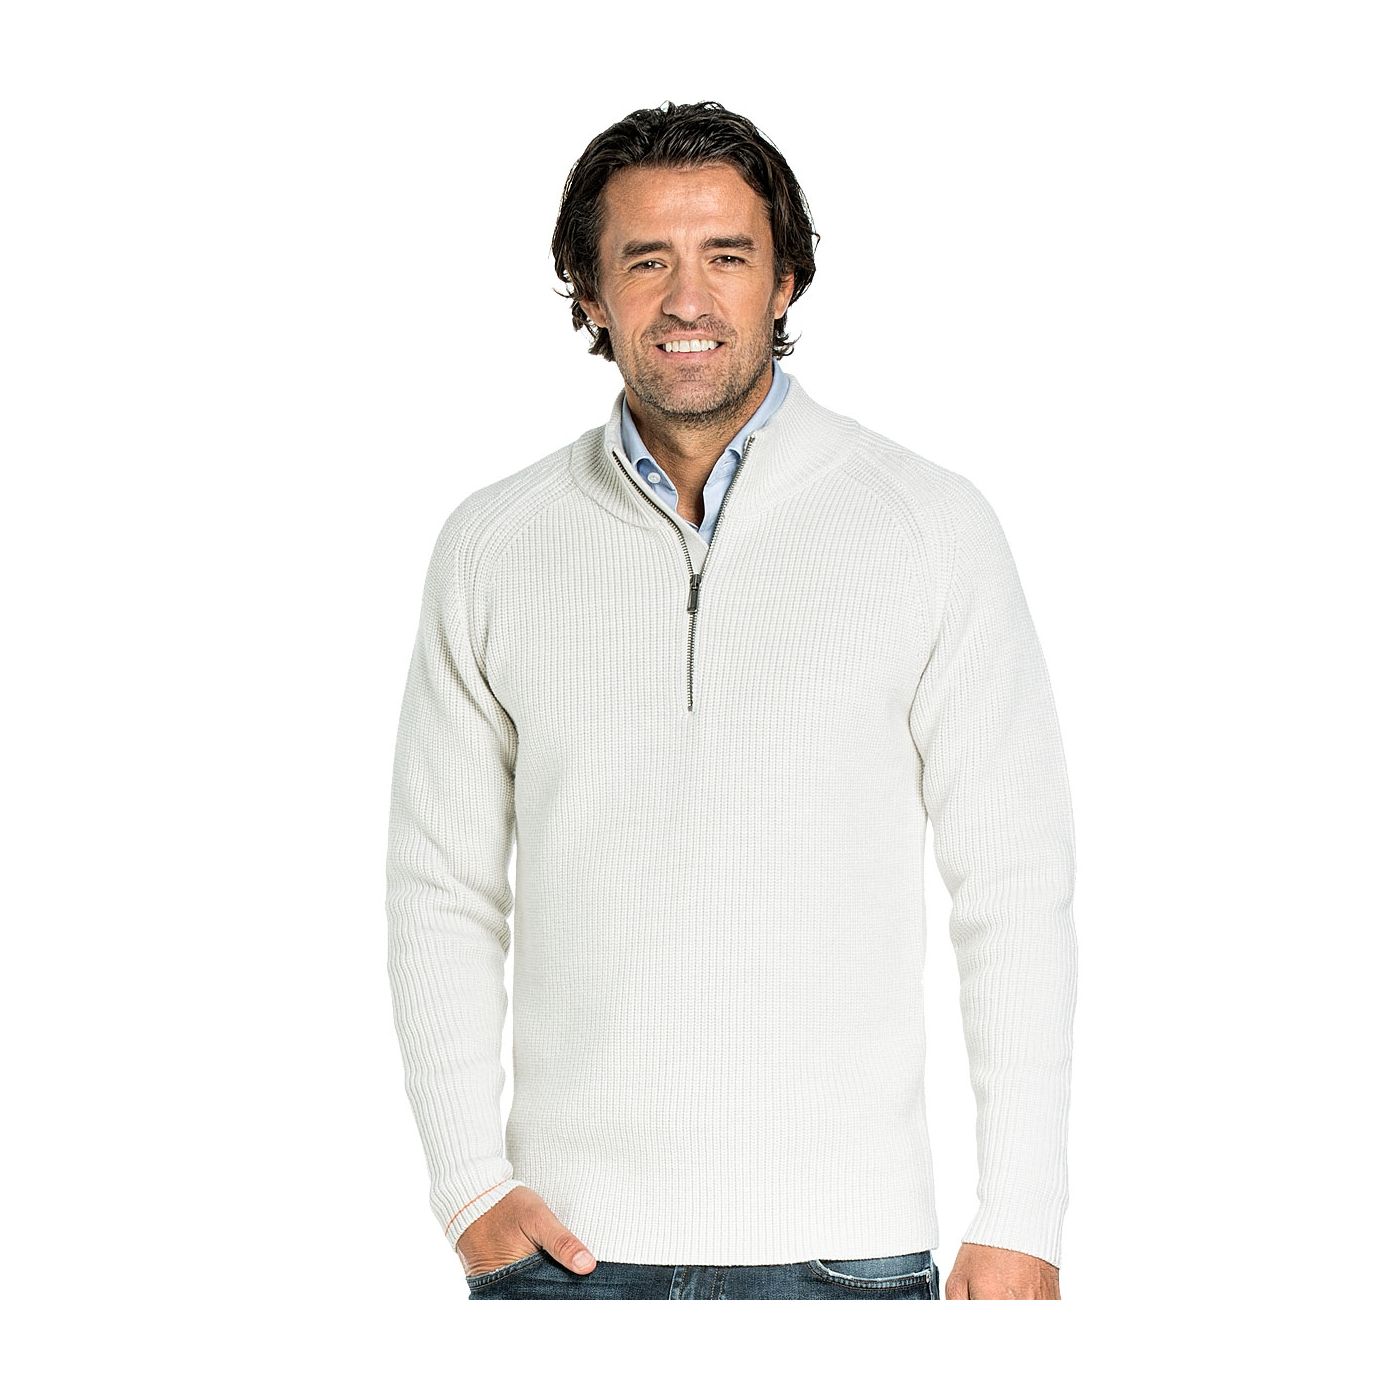 Fisherman sweater for men made of Merino wool in White